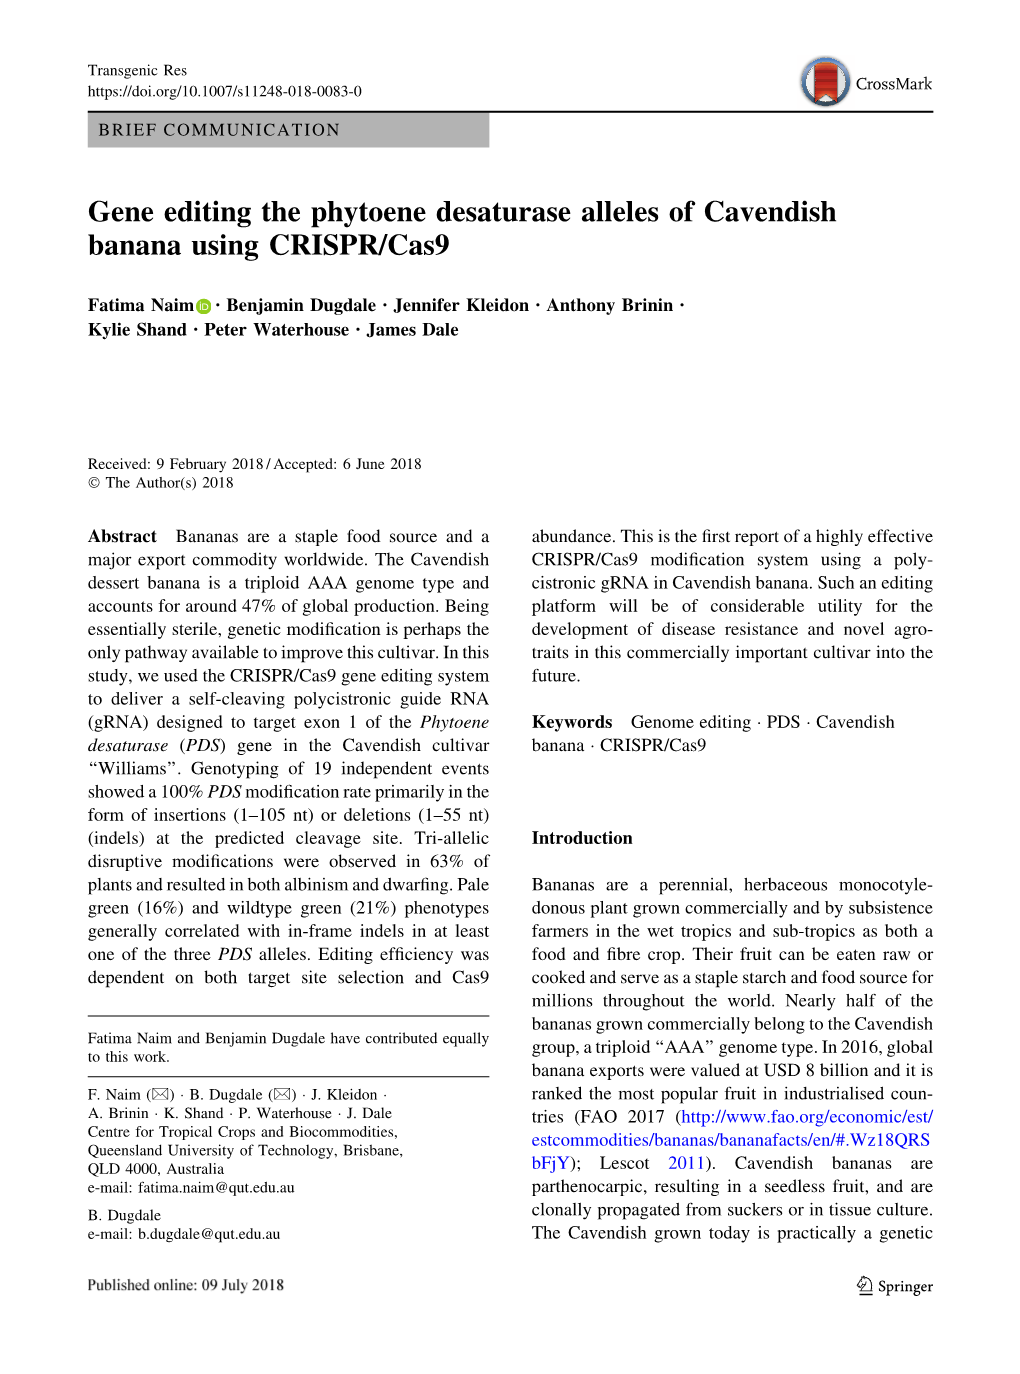 Gene Editing the Phytoene Desaturase Alleles of Cavendish Banana Using CRISPR/Cas9